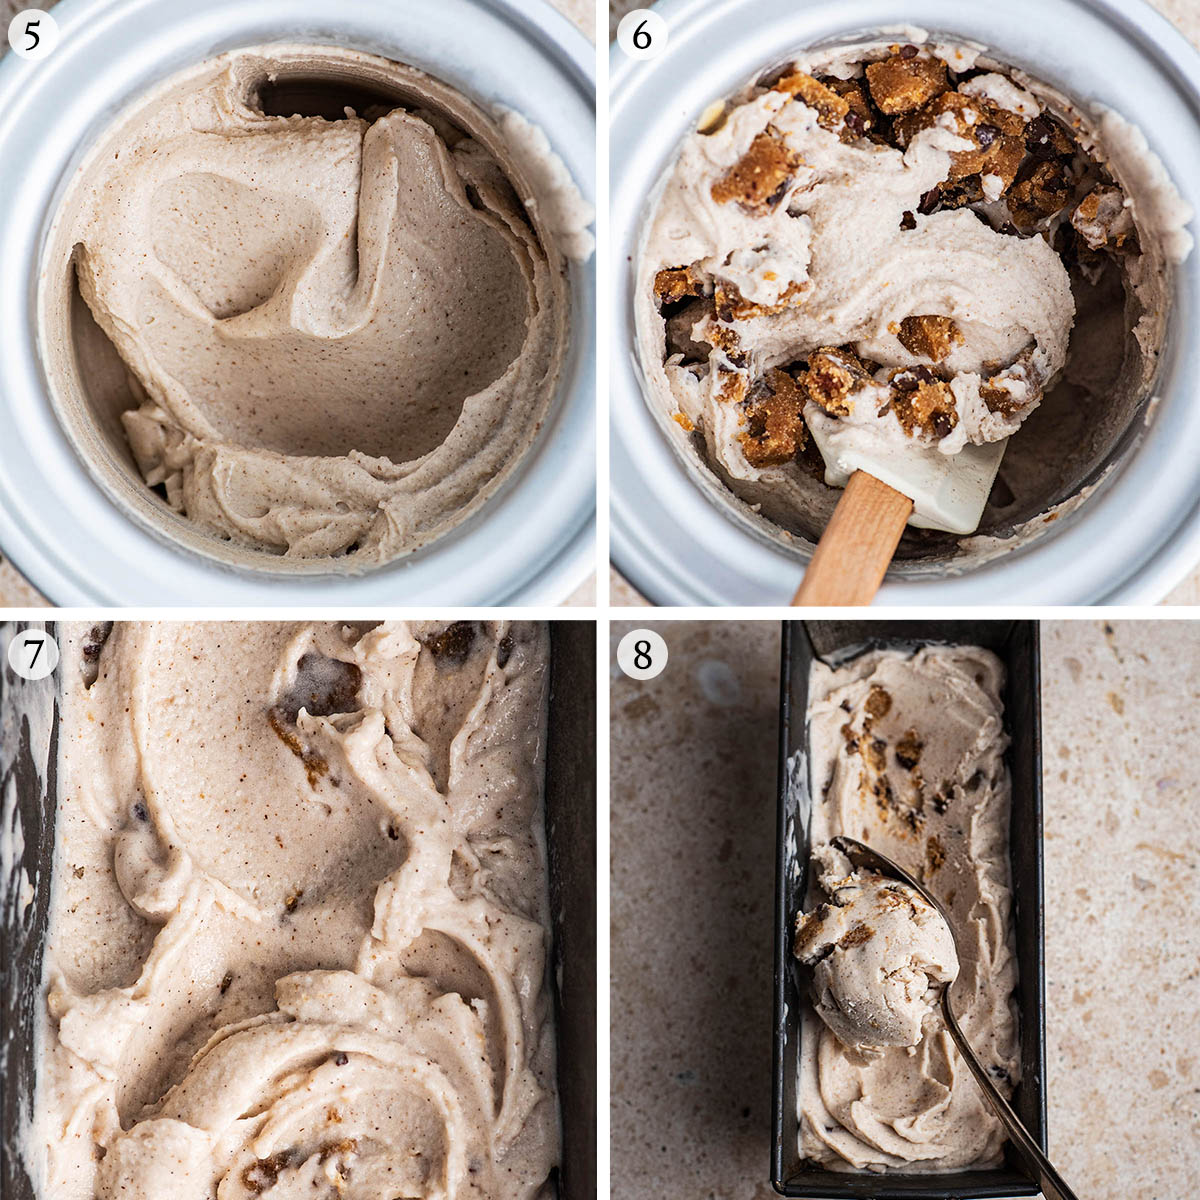 Ice cream steps 5 to 8.